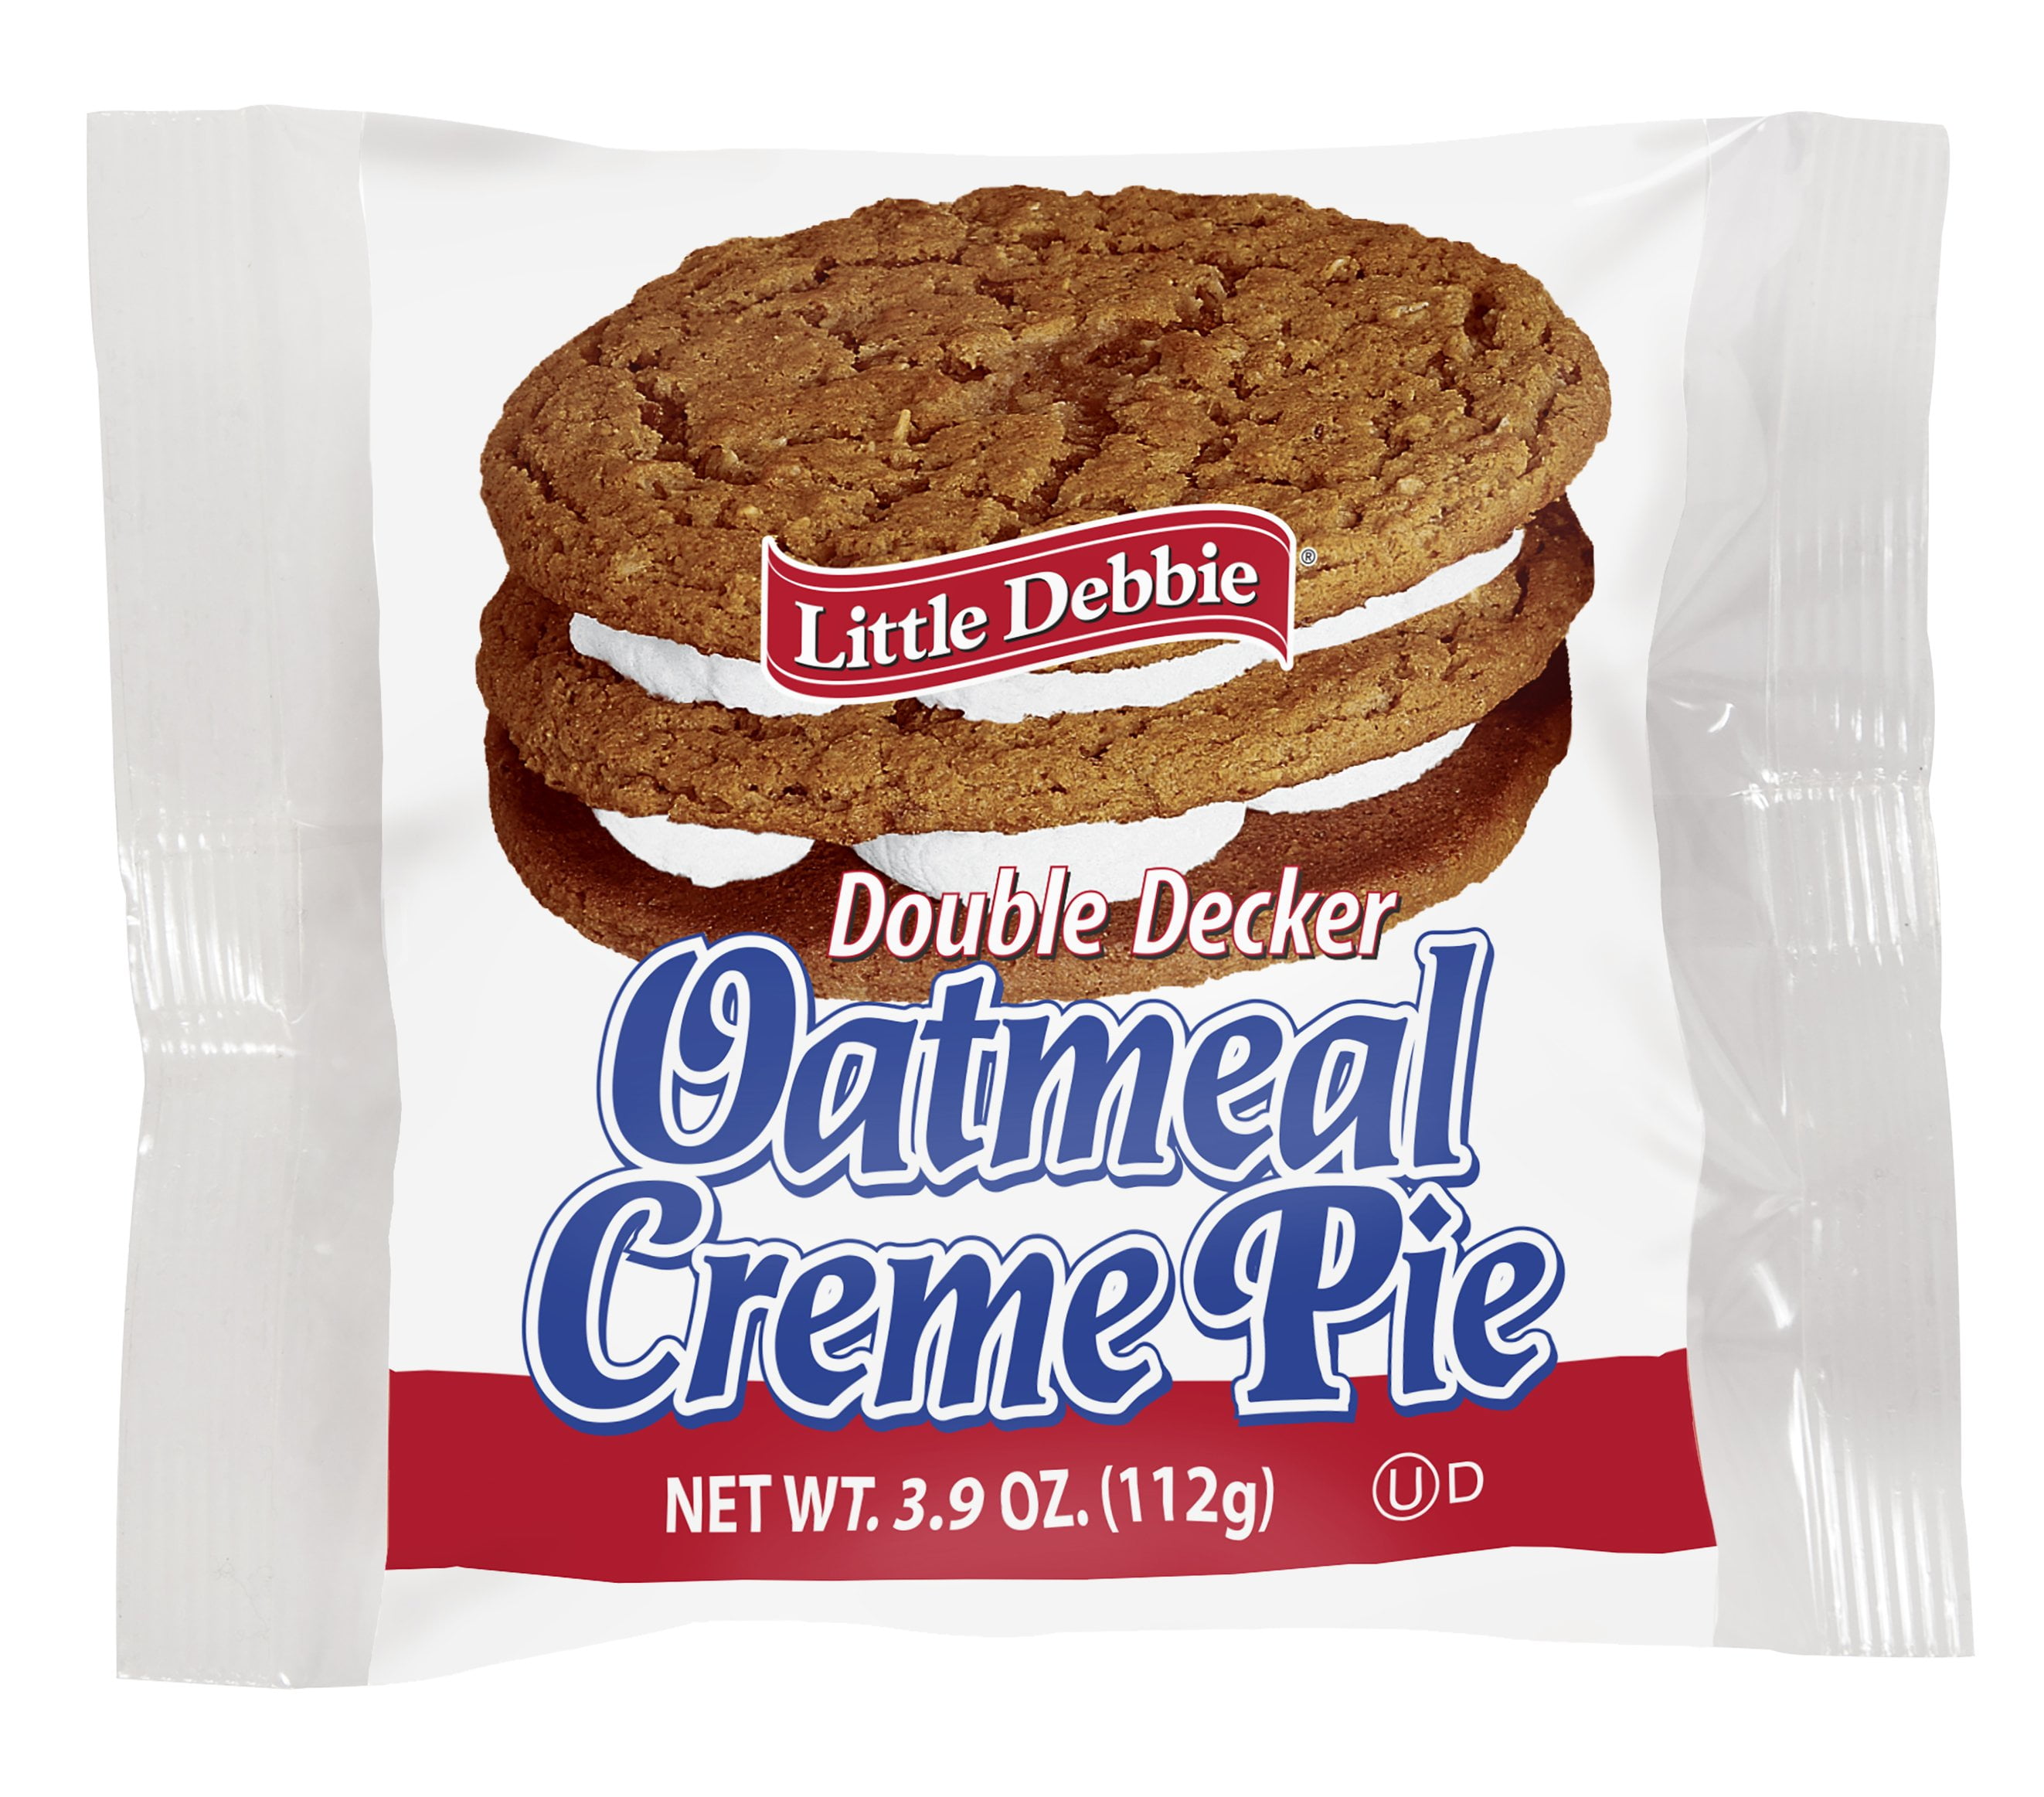 Little Debbie Oatmeal Creme Pie 3.9 / OUNCE - $0.51 per OZ